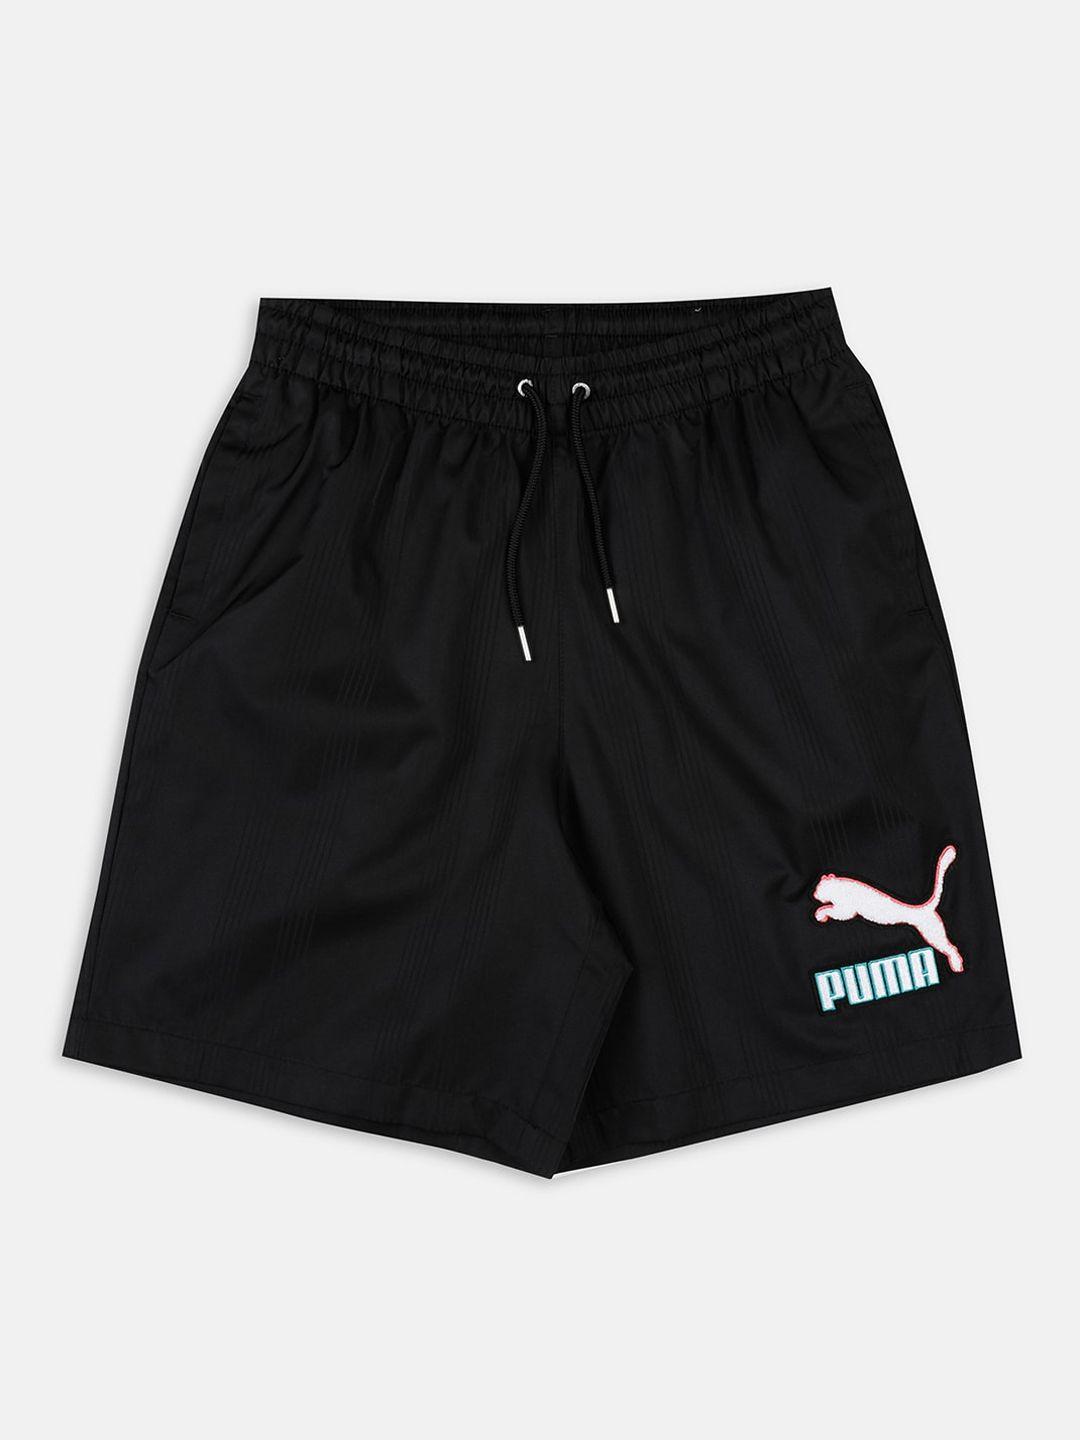 puma boys black brand logo printed shorts